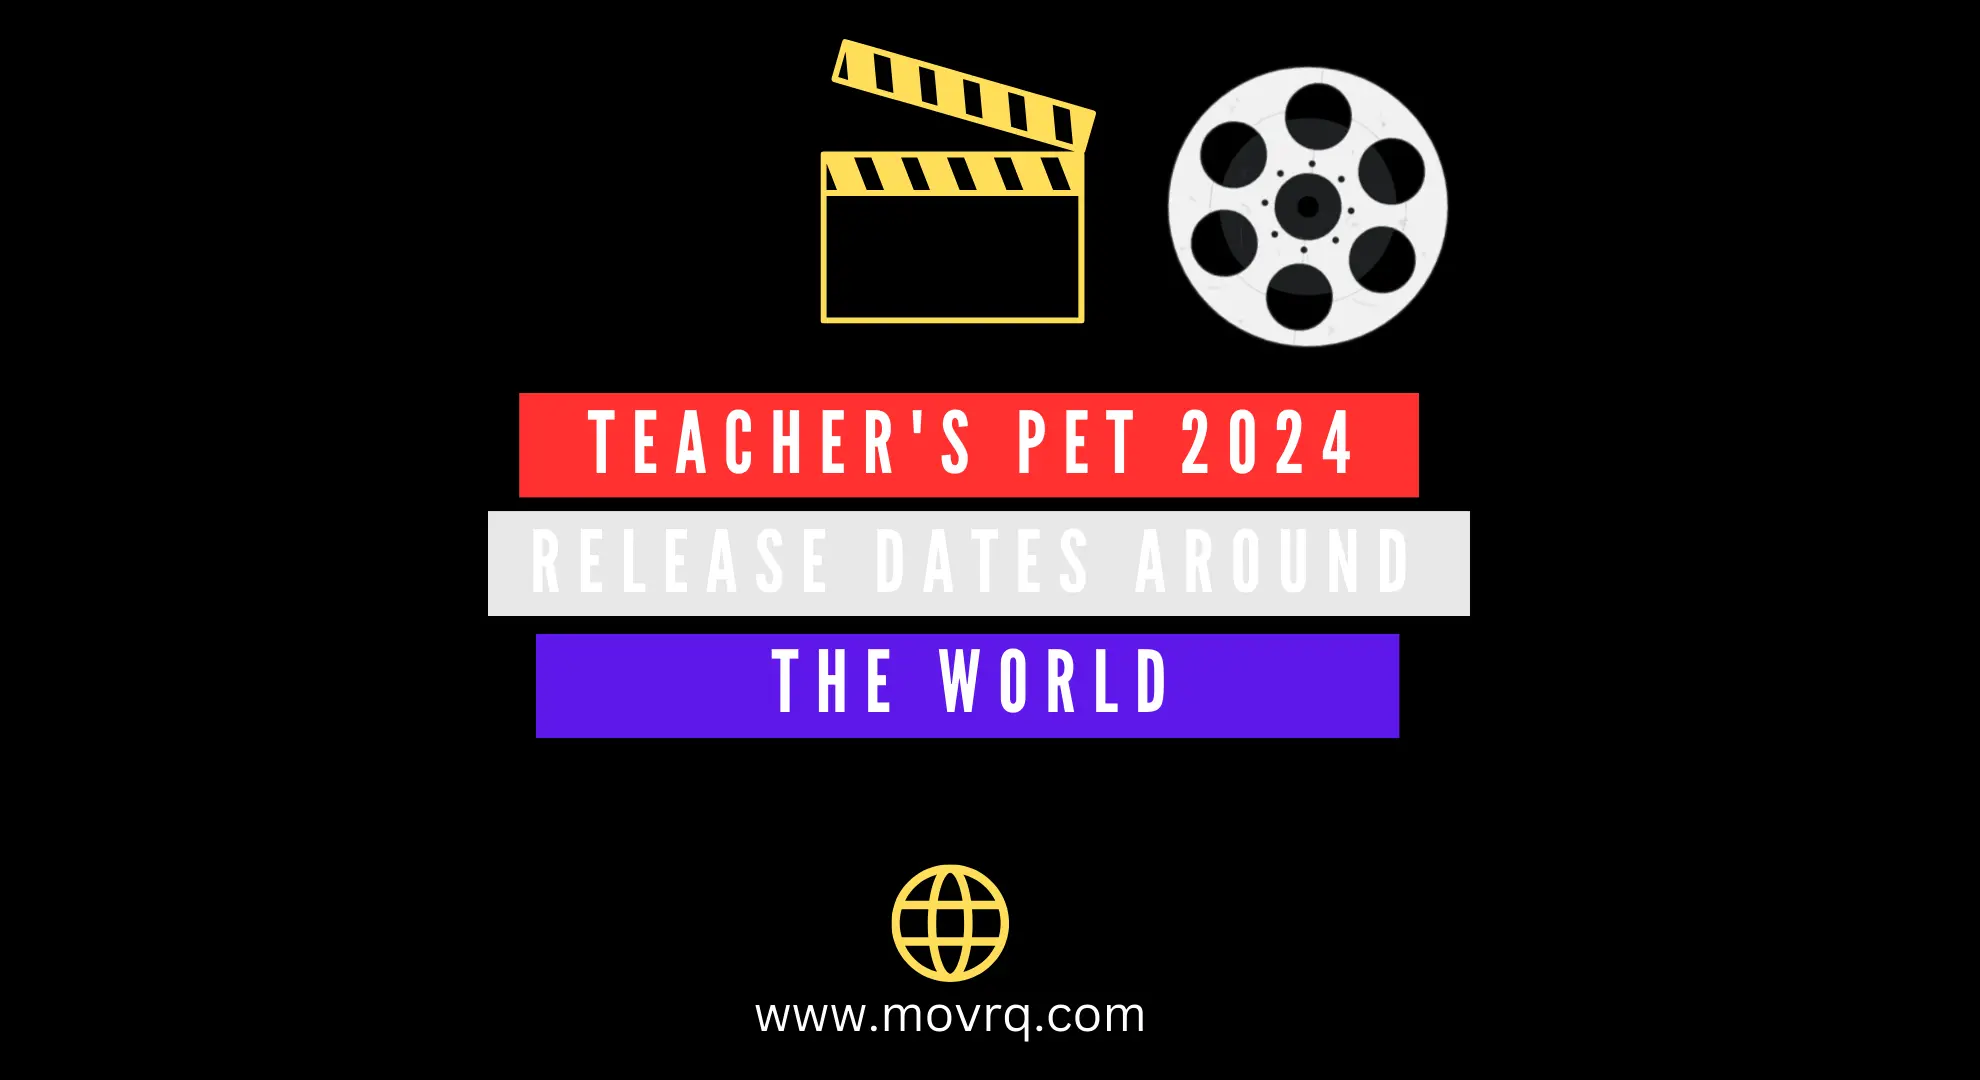 Teacher's Pet 2024 Release Dates Around the World